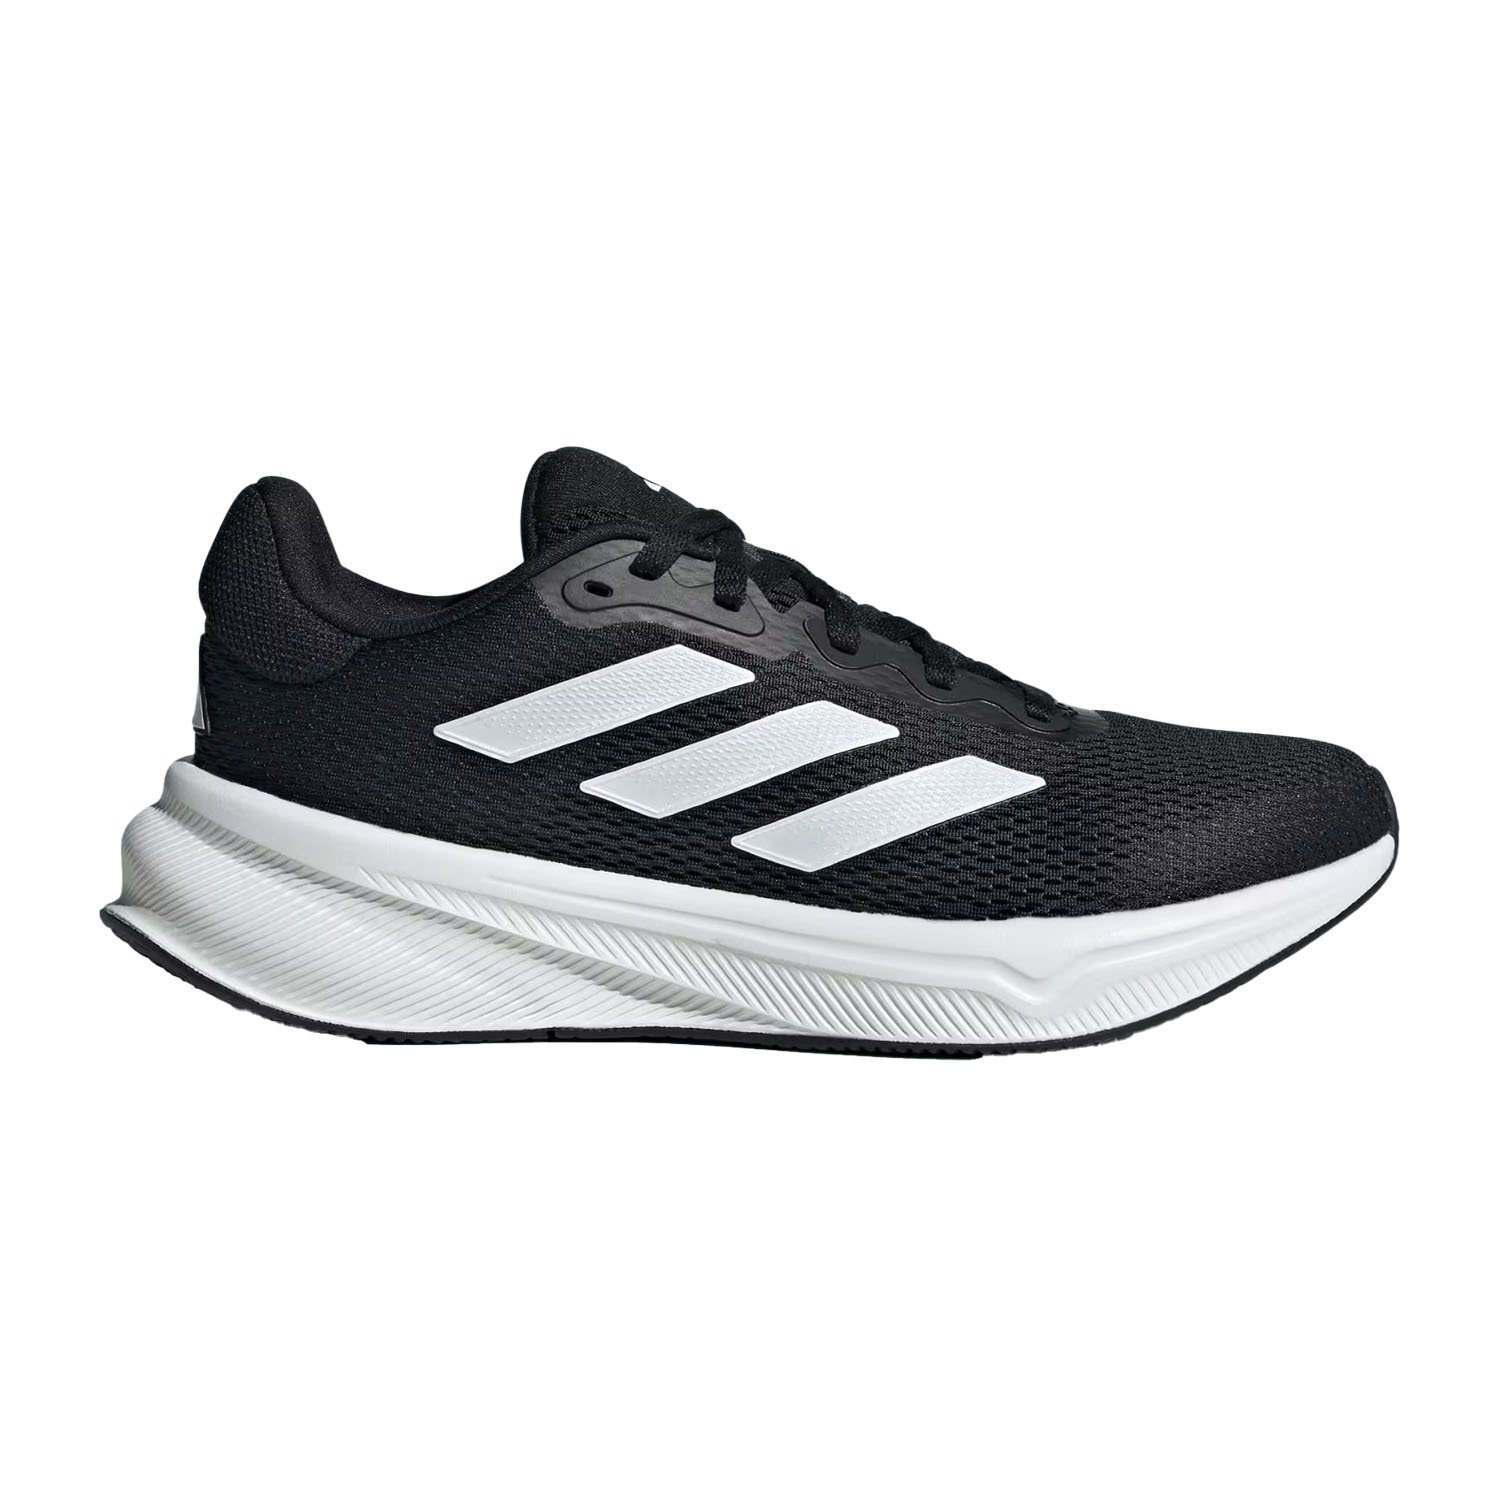 Adidas Response Kadın Koşu Ayakkabısı - Siyah - 1